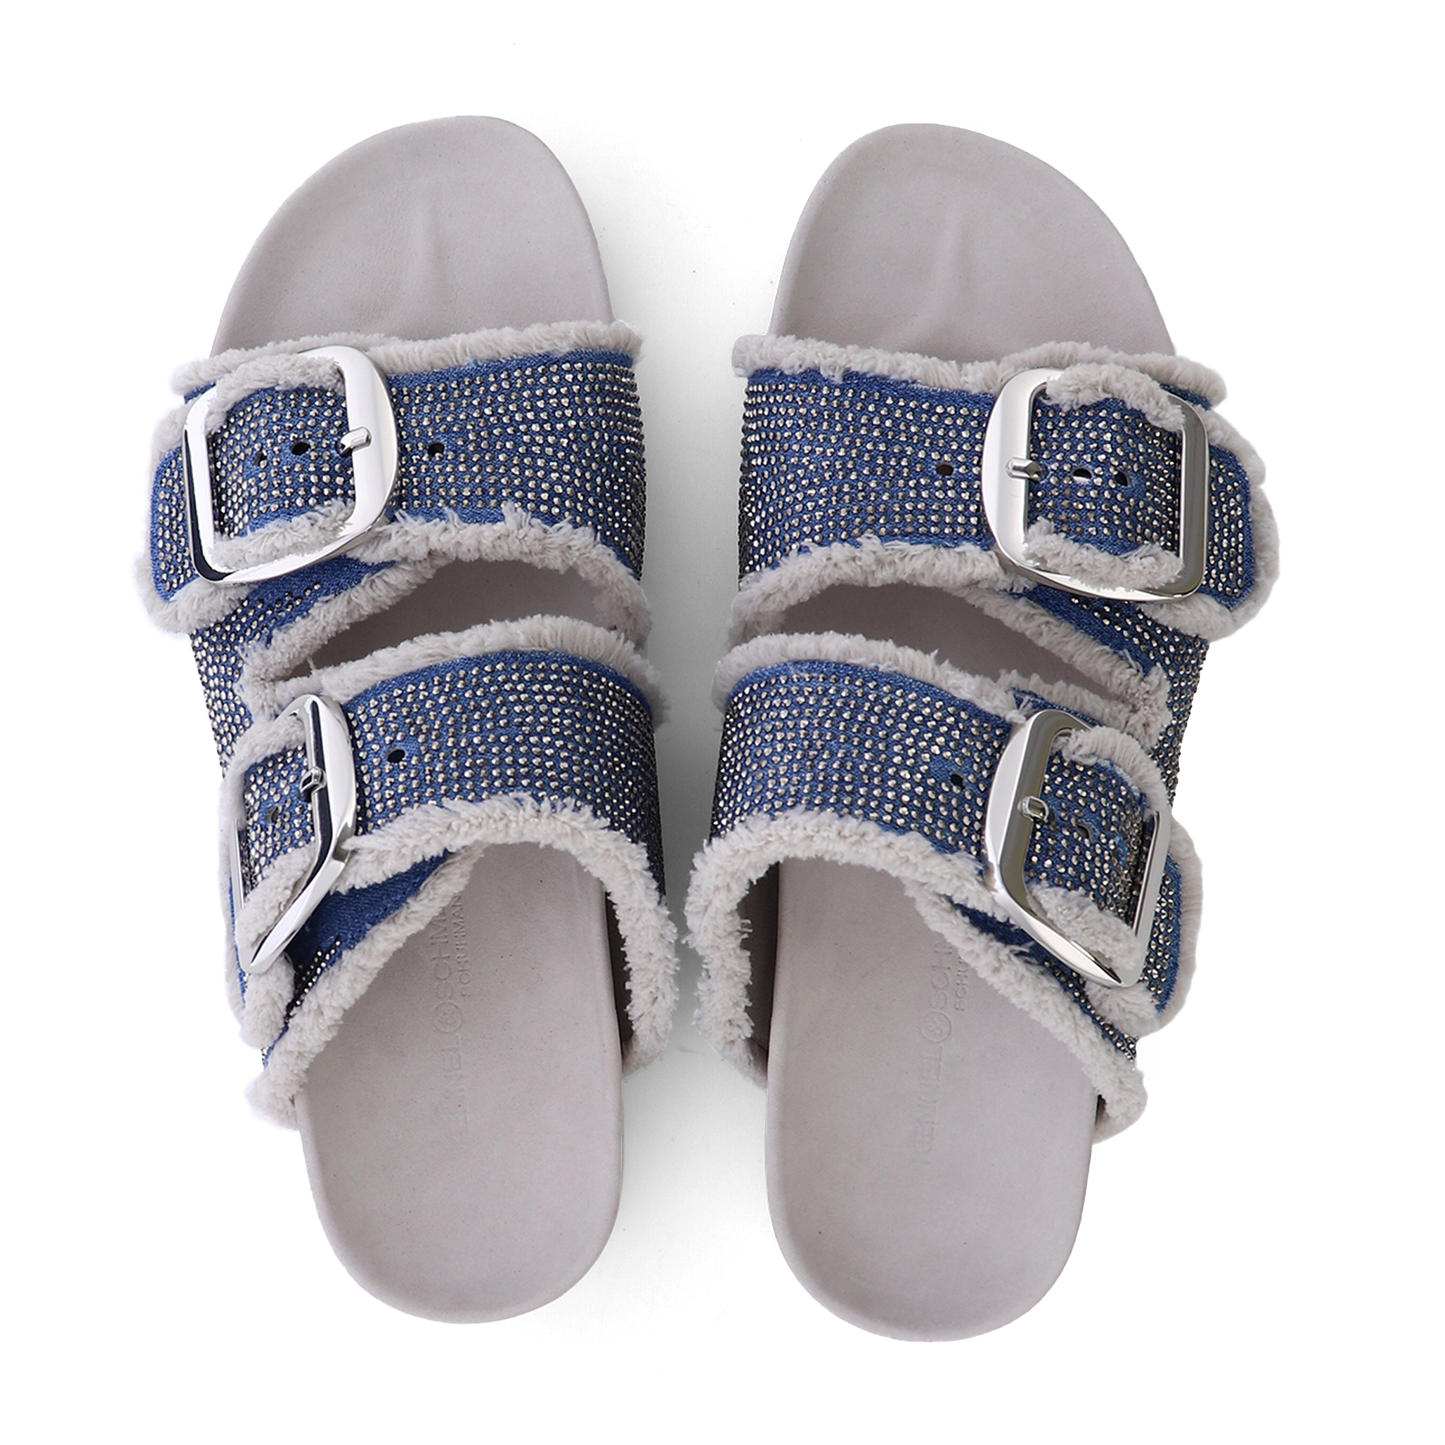 Love sandal blue/ivory sw Shoe Kennel & Schmenger